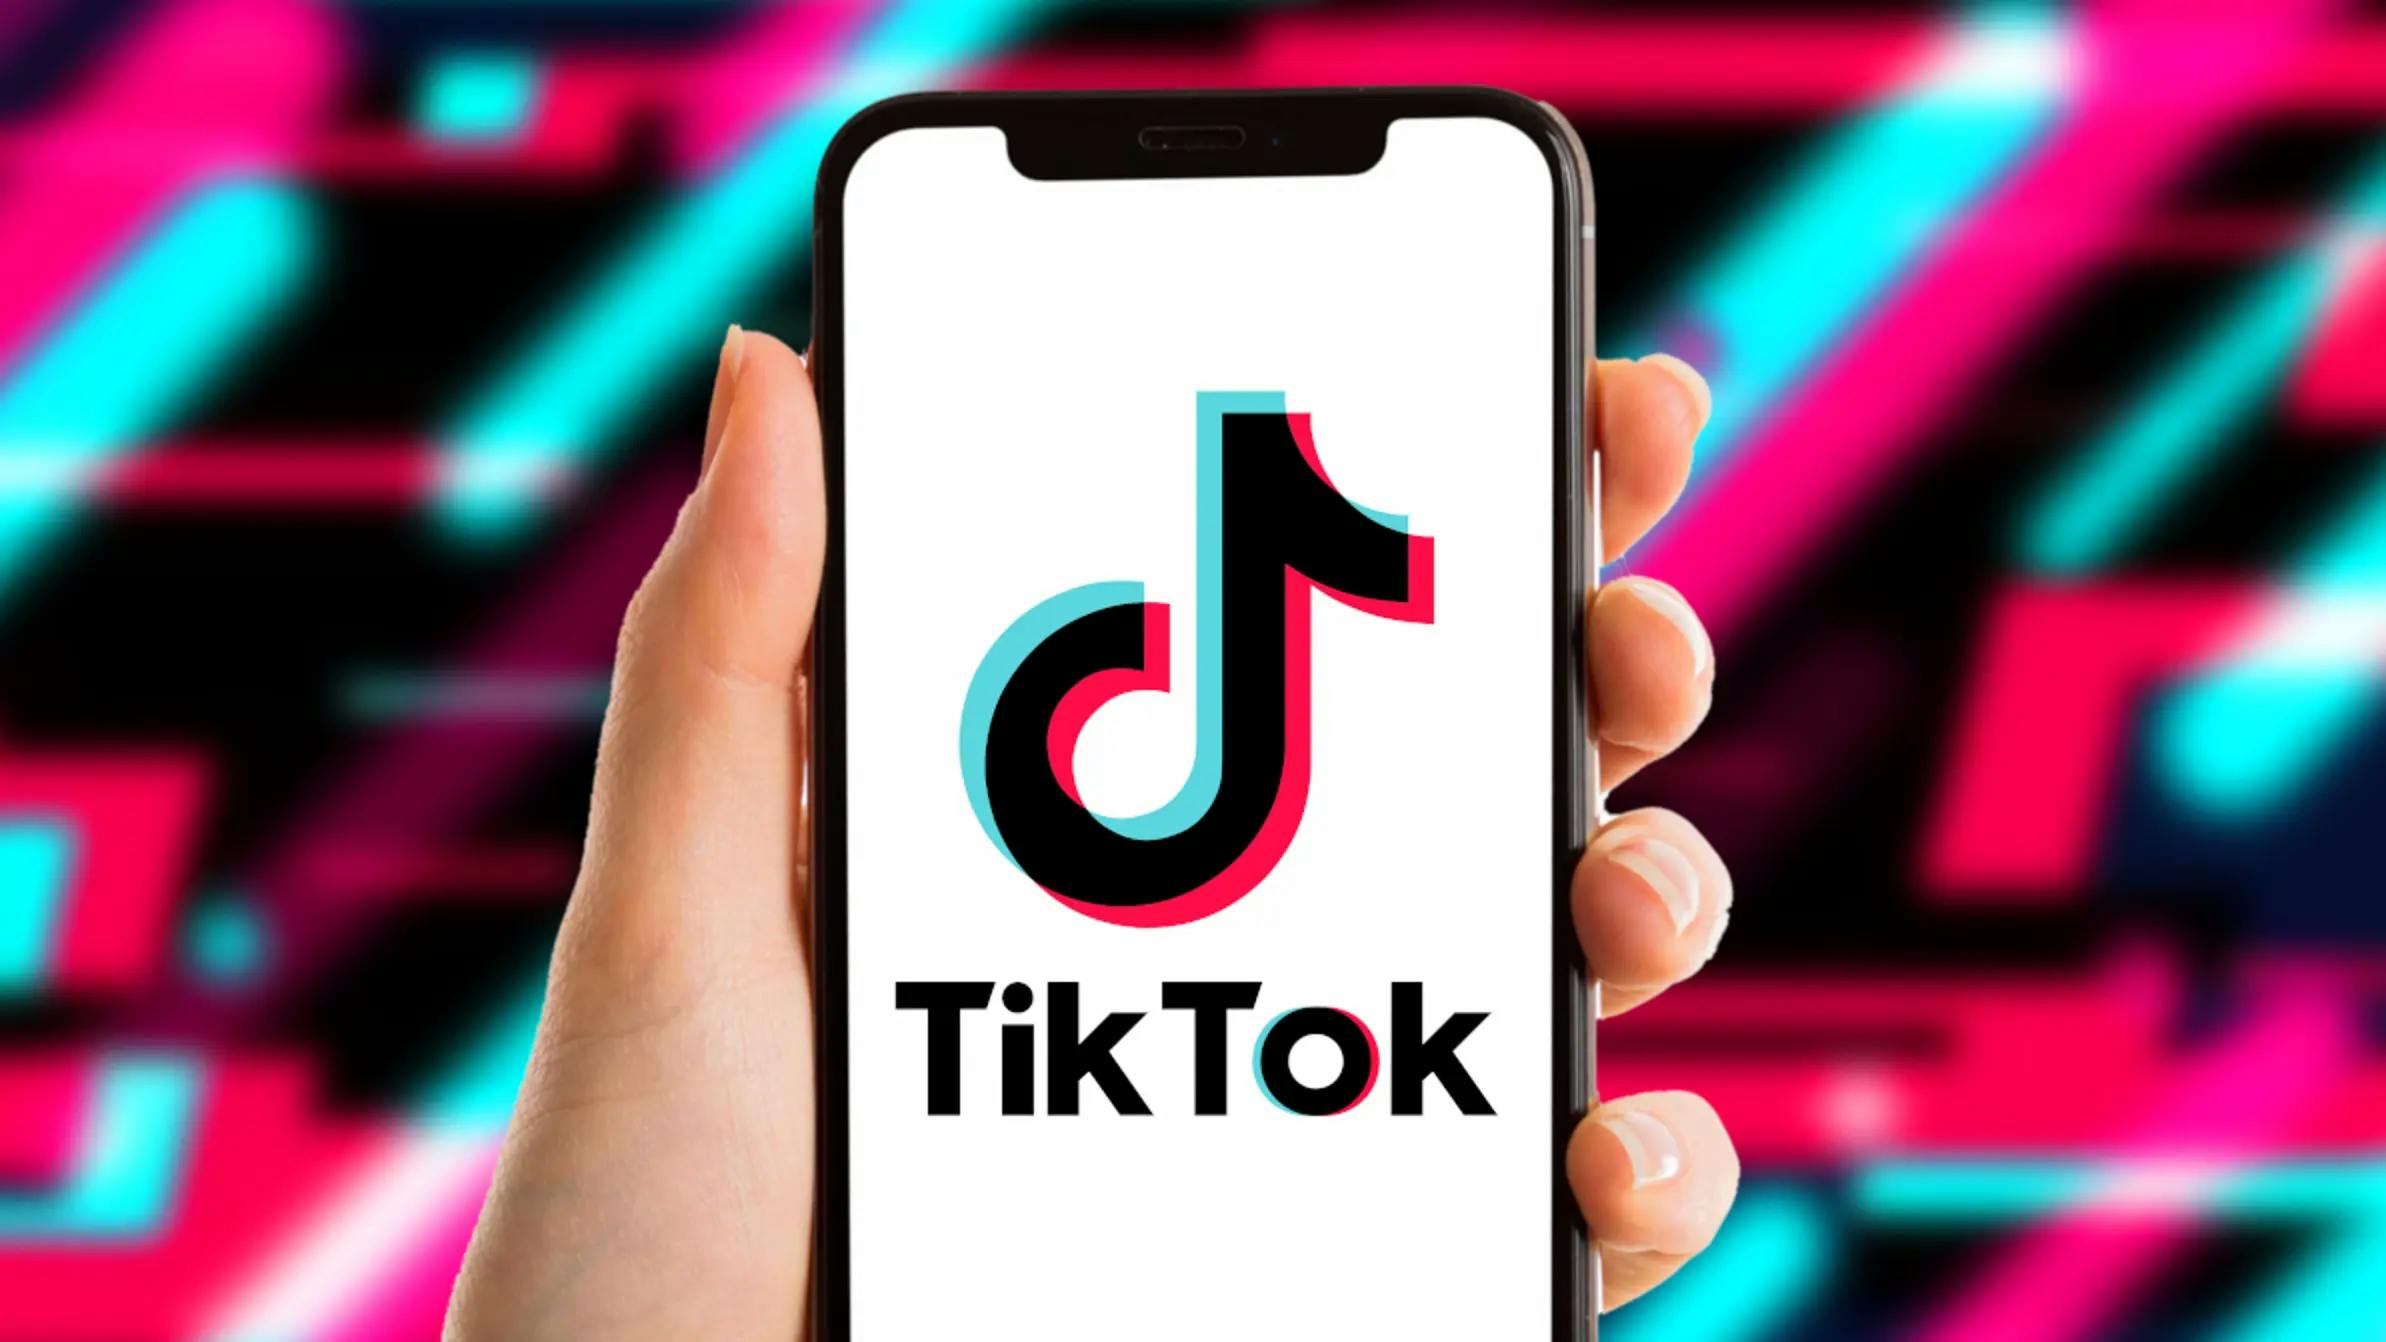 10 ways to build your TikTok brand